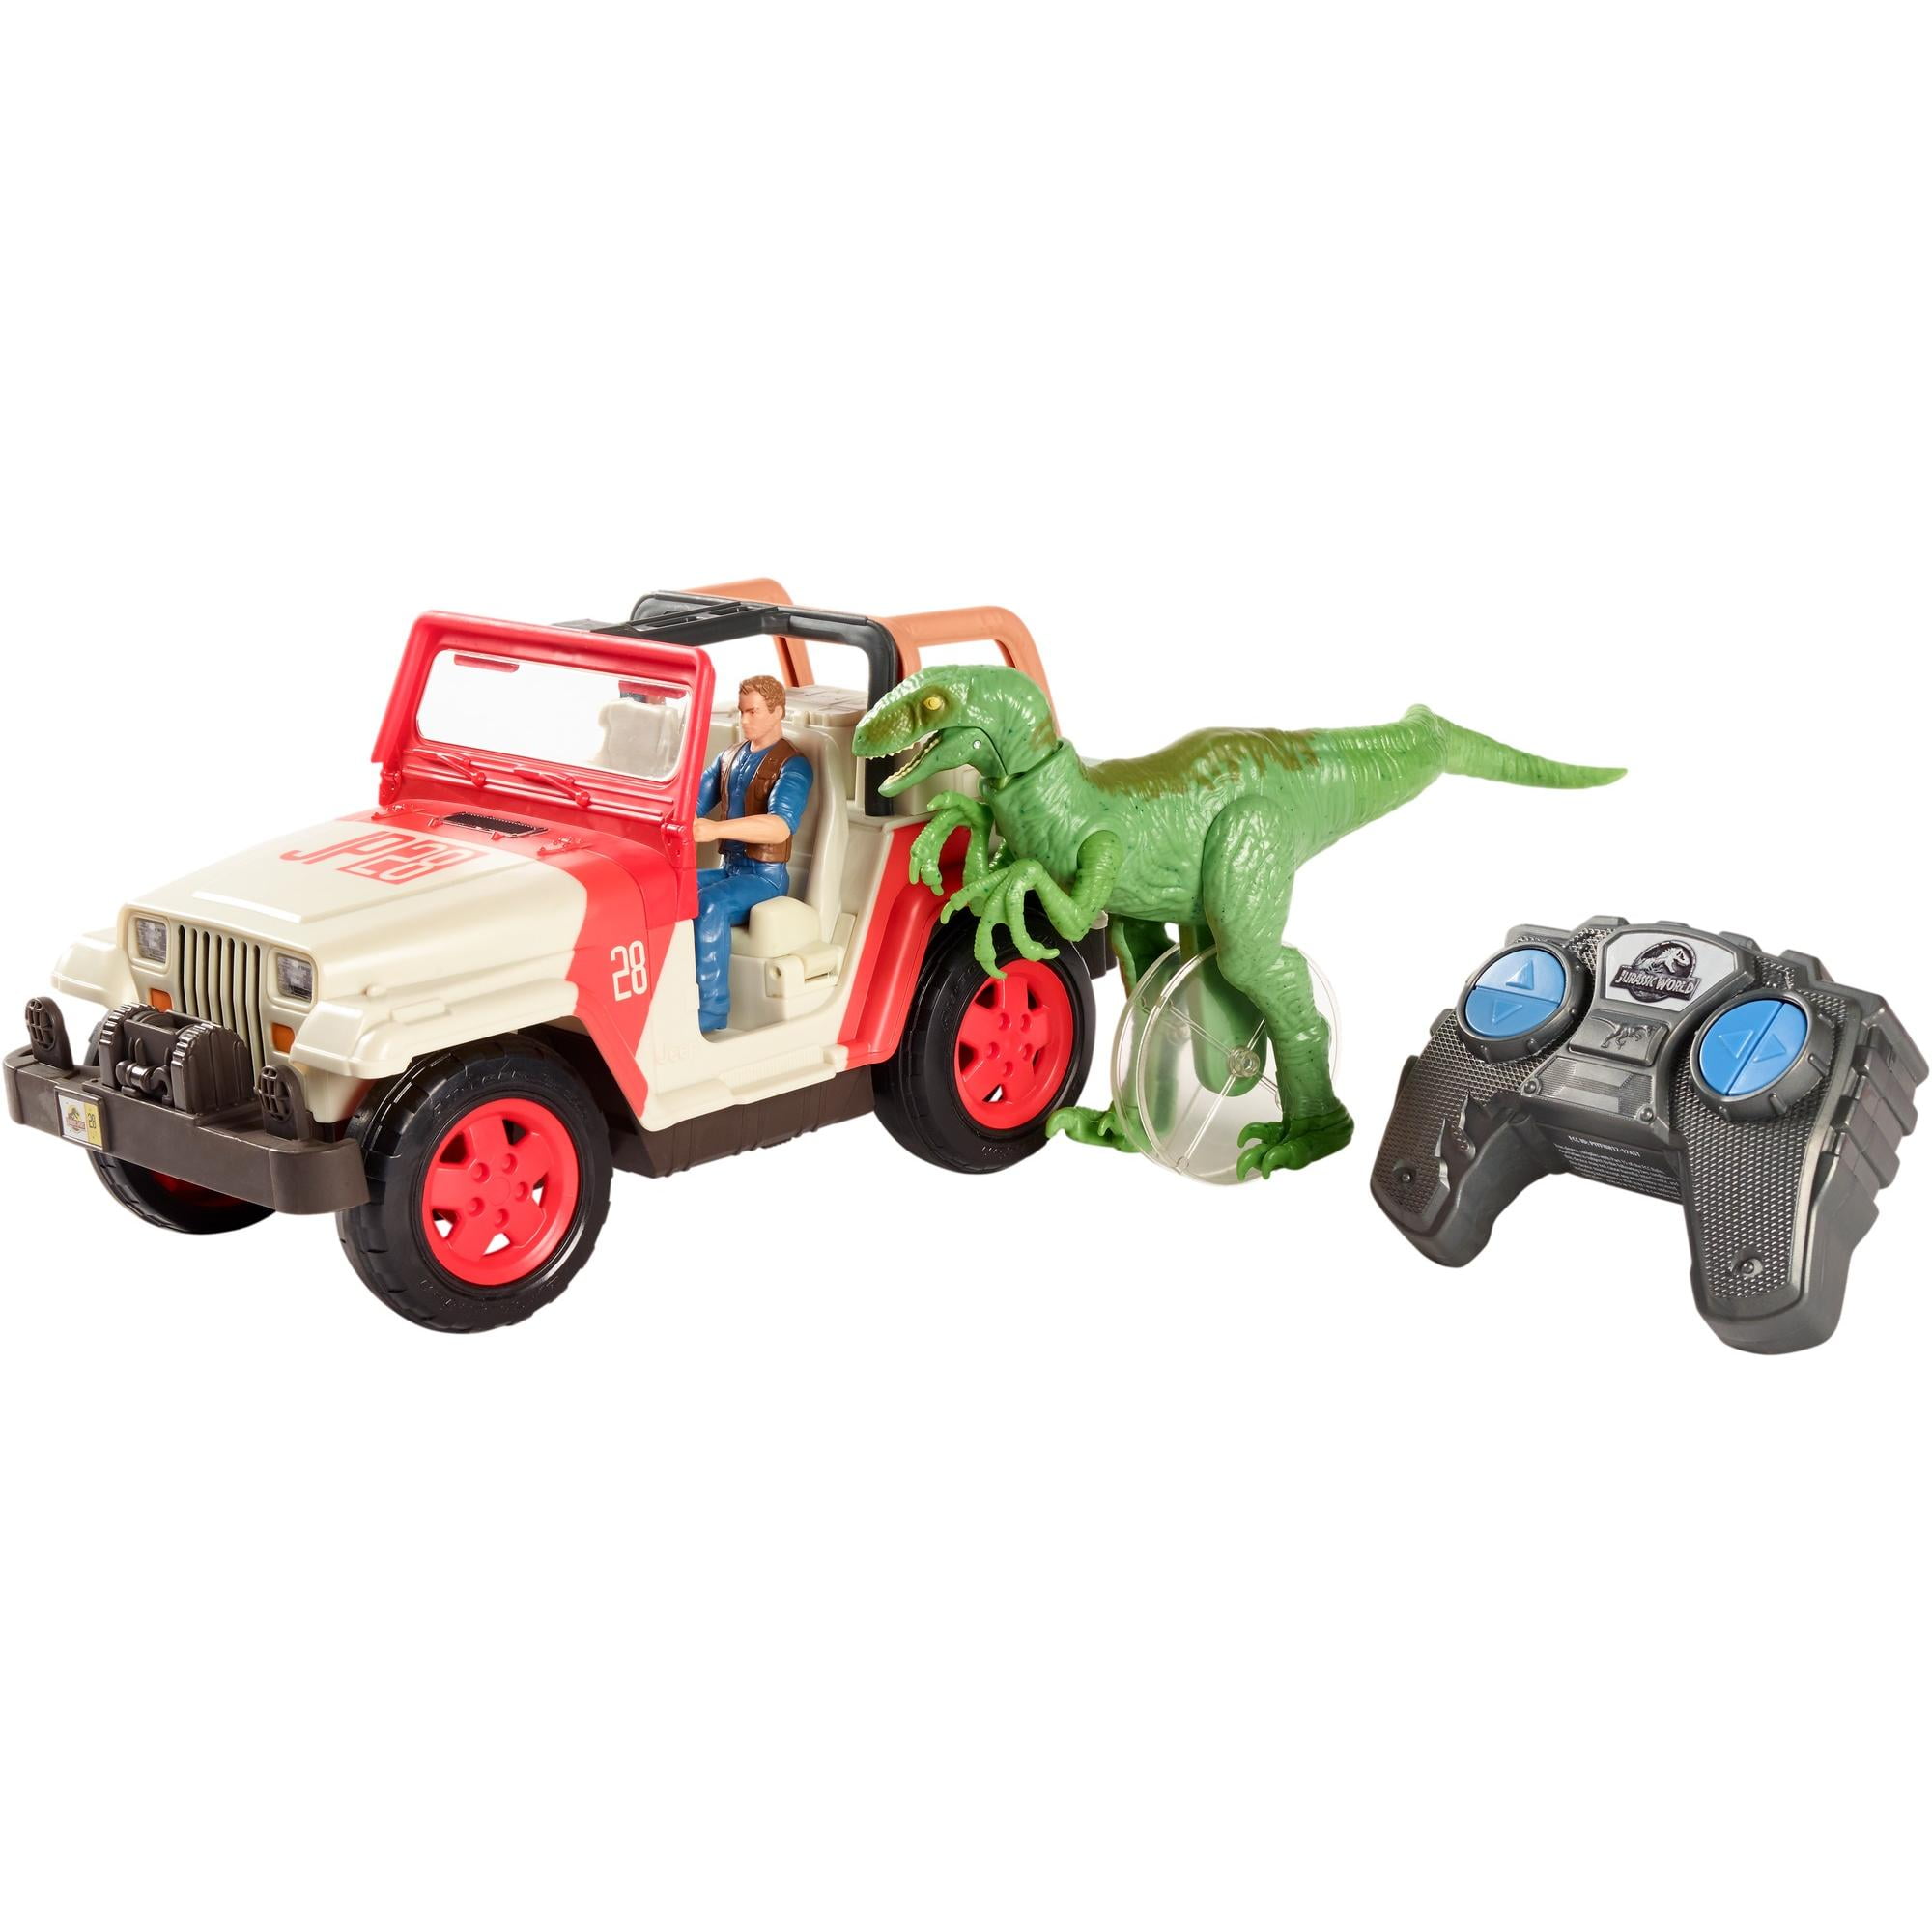 Matchbox Jurassic World Vehicle Raptor Attack Vehicle RC *Brand New Sealed*